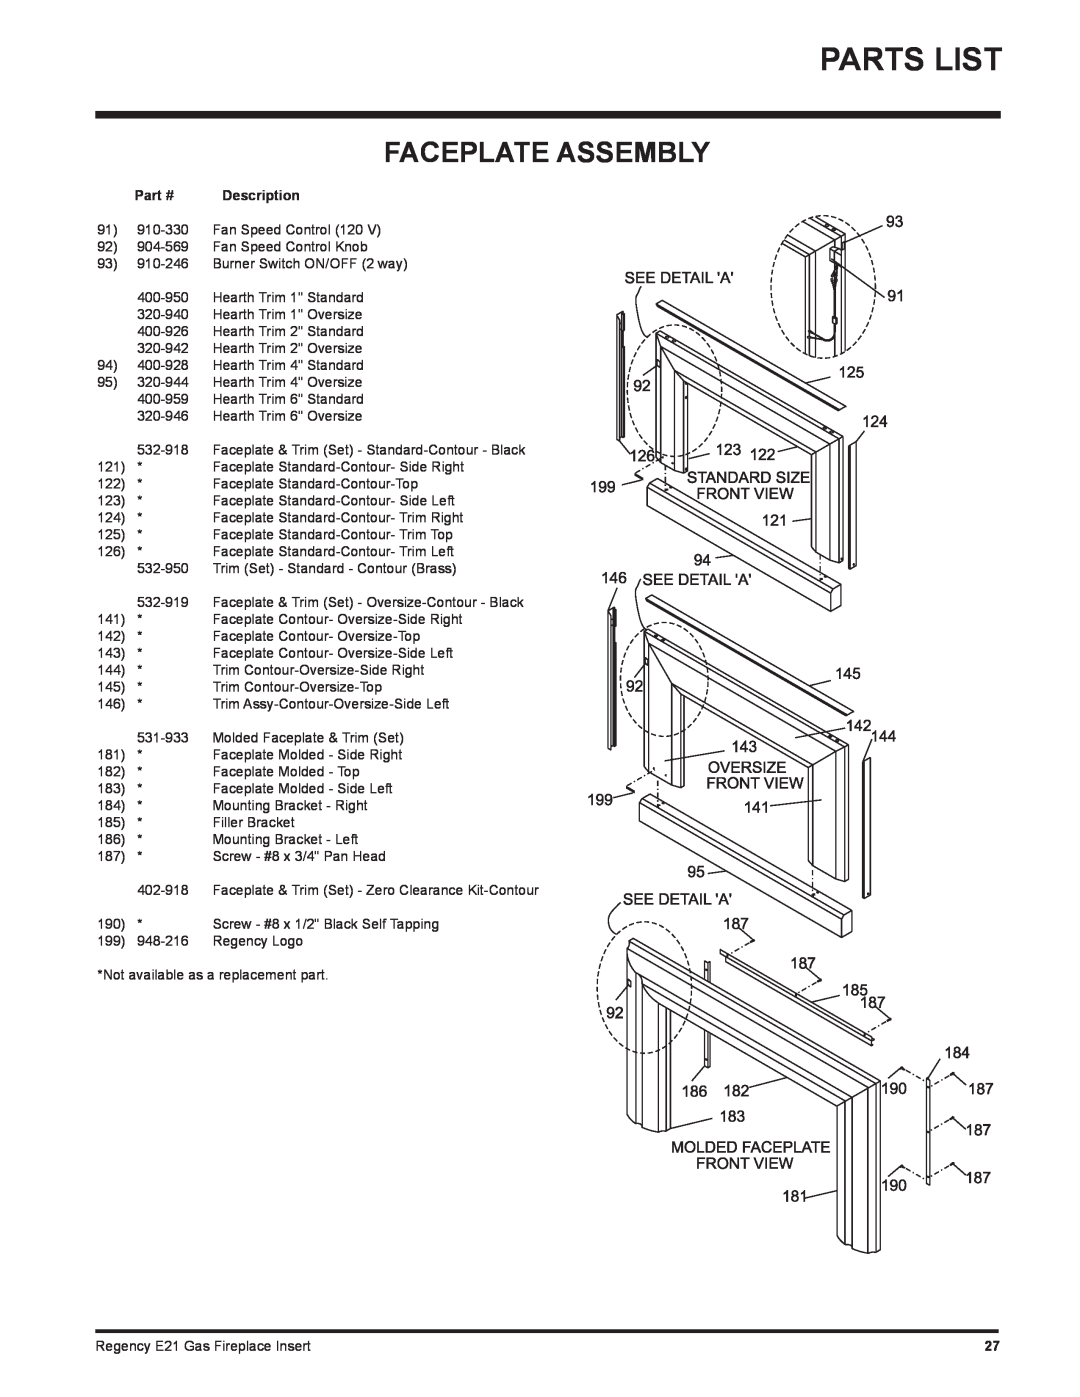 Regency E21-NG1, E21-LP1 installation manual Parts List, Faceplate Assembly, Description 